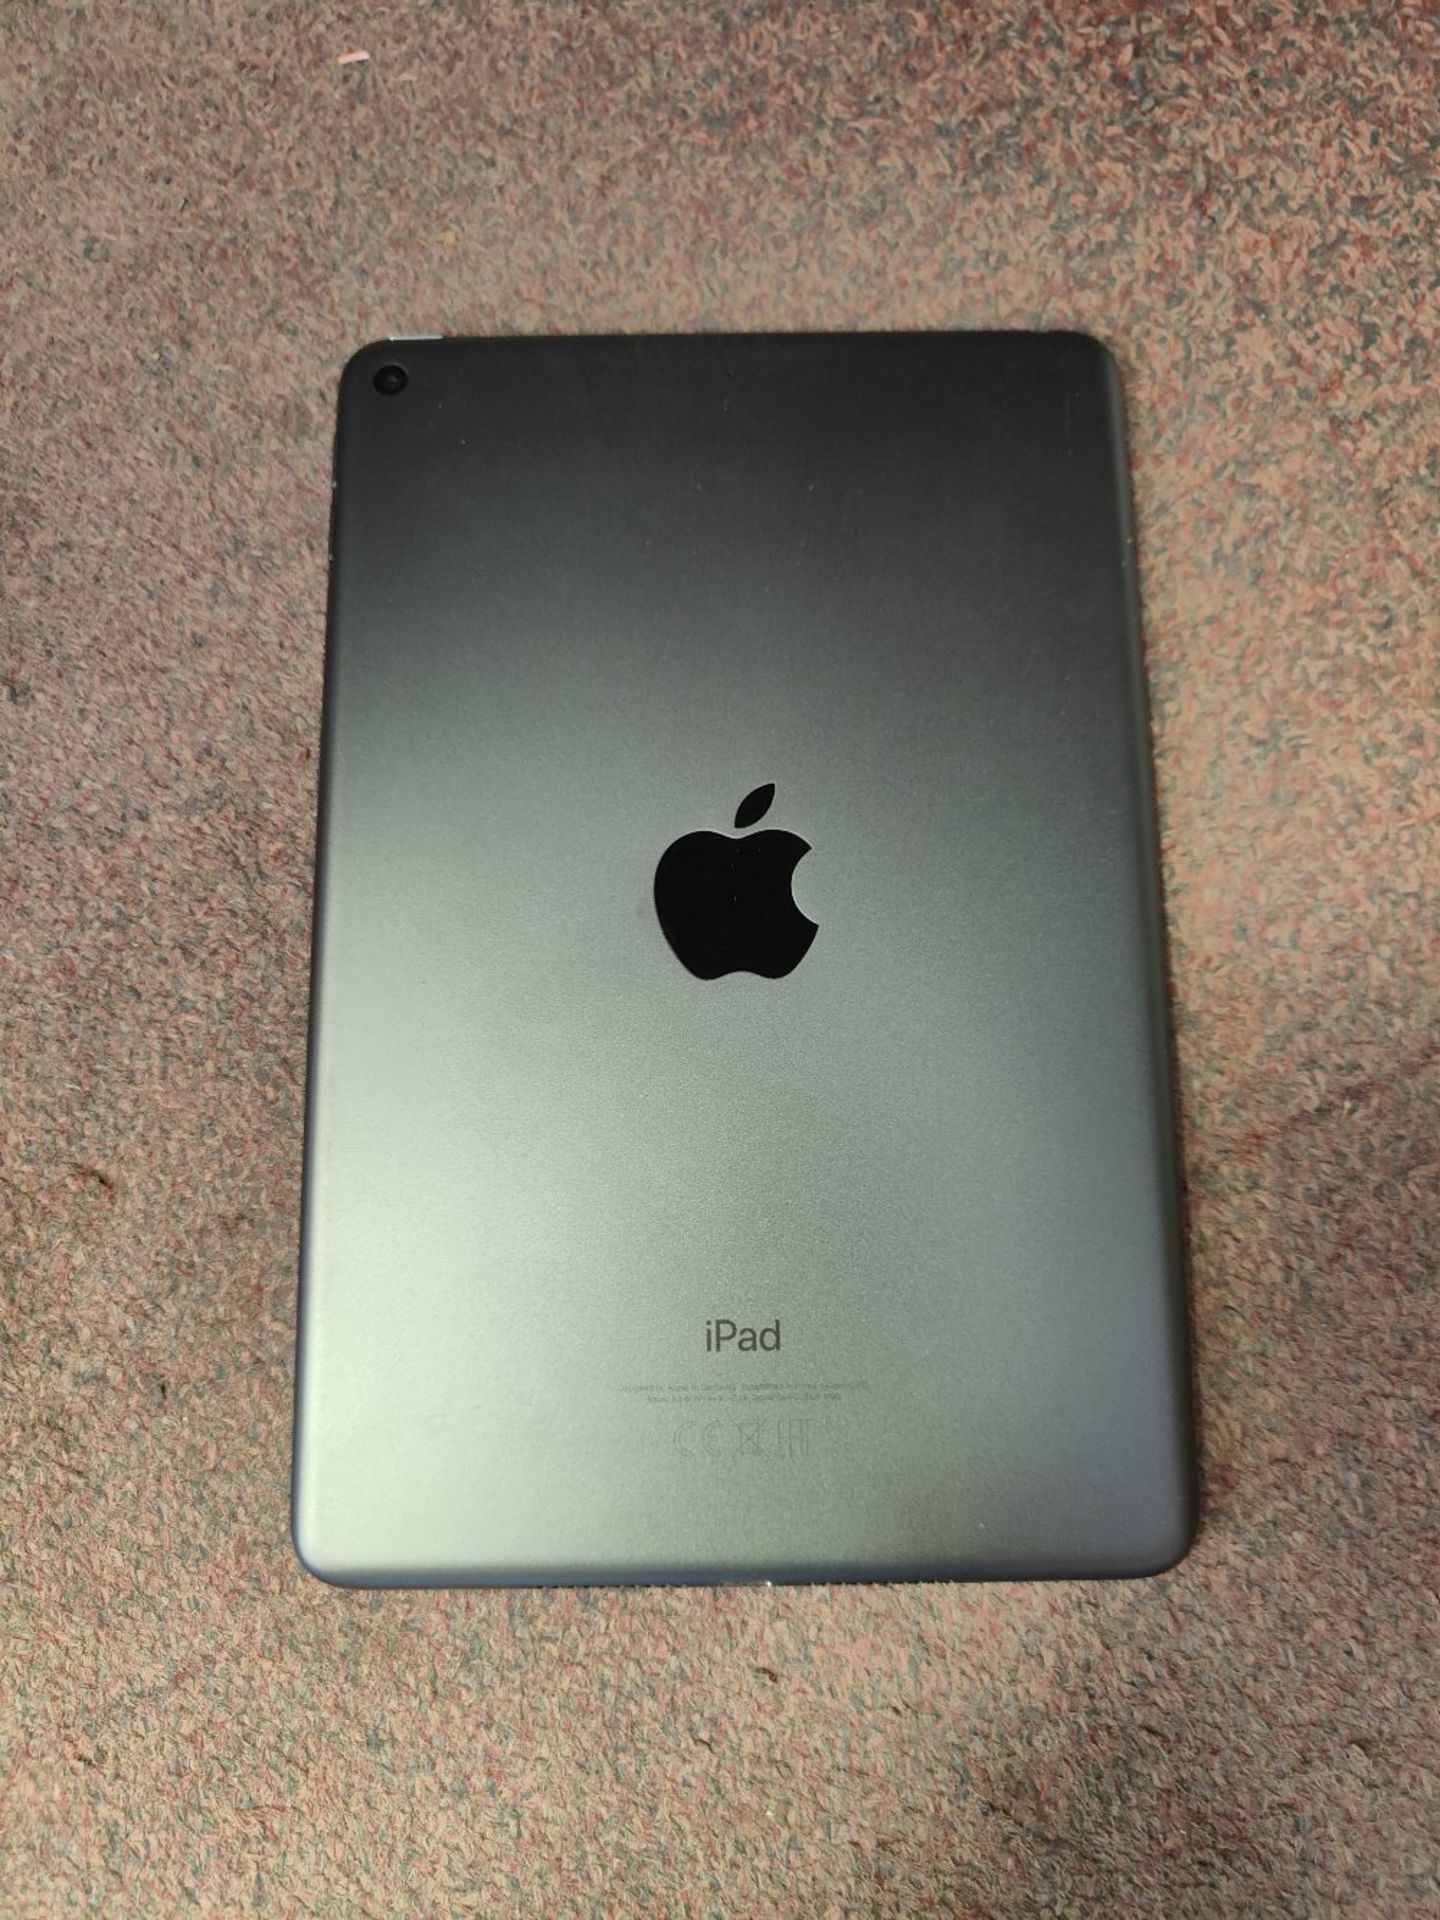 Apple iPad Mini 5th Gen 64GB Space Grey - WiFi Only - Image 3 of 4